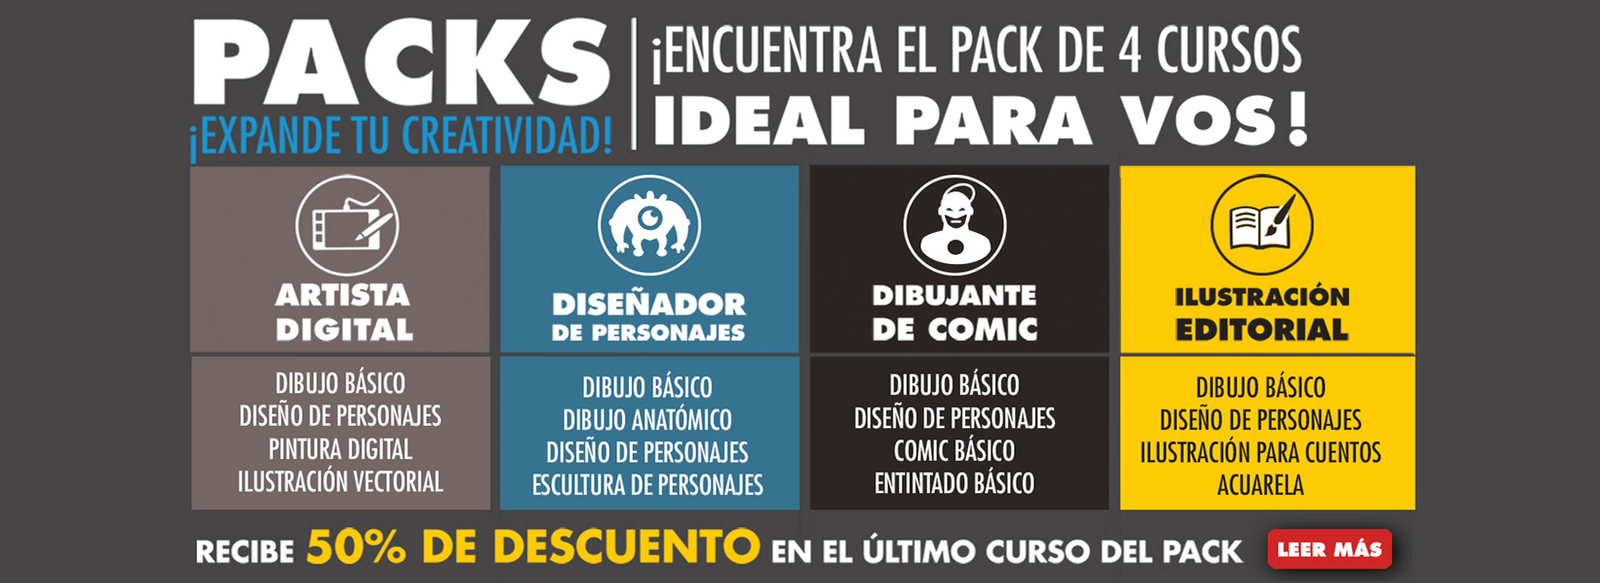 pack-web